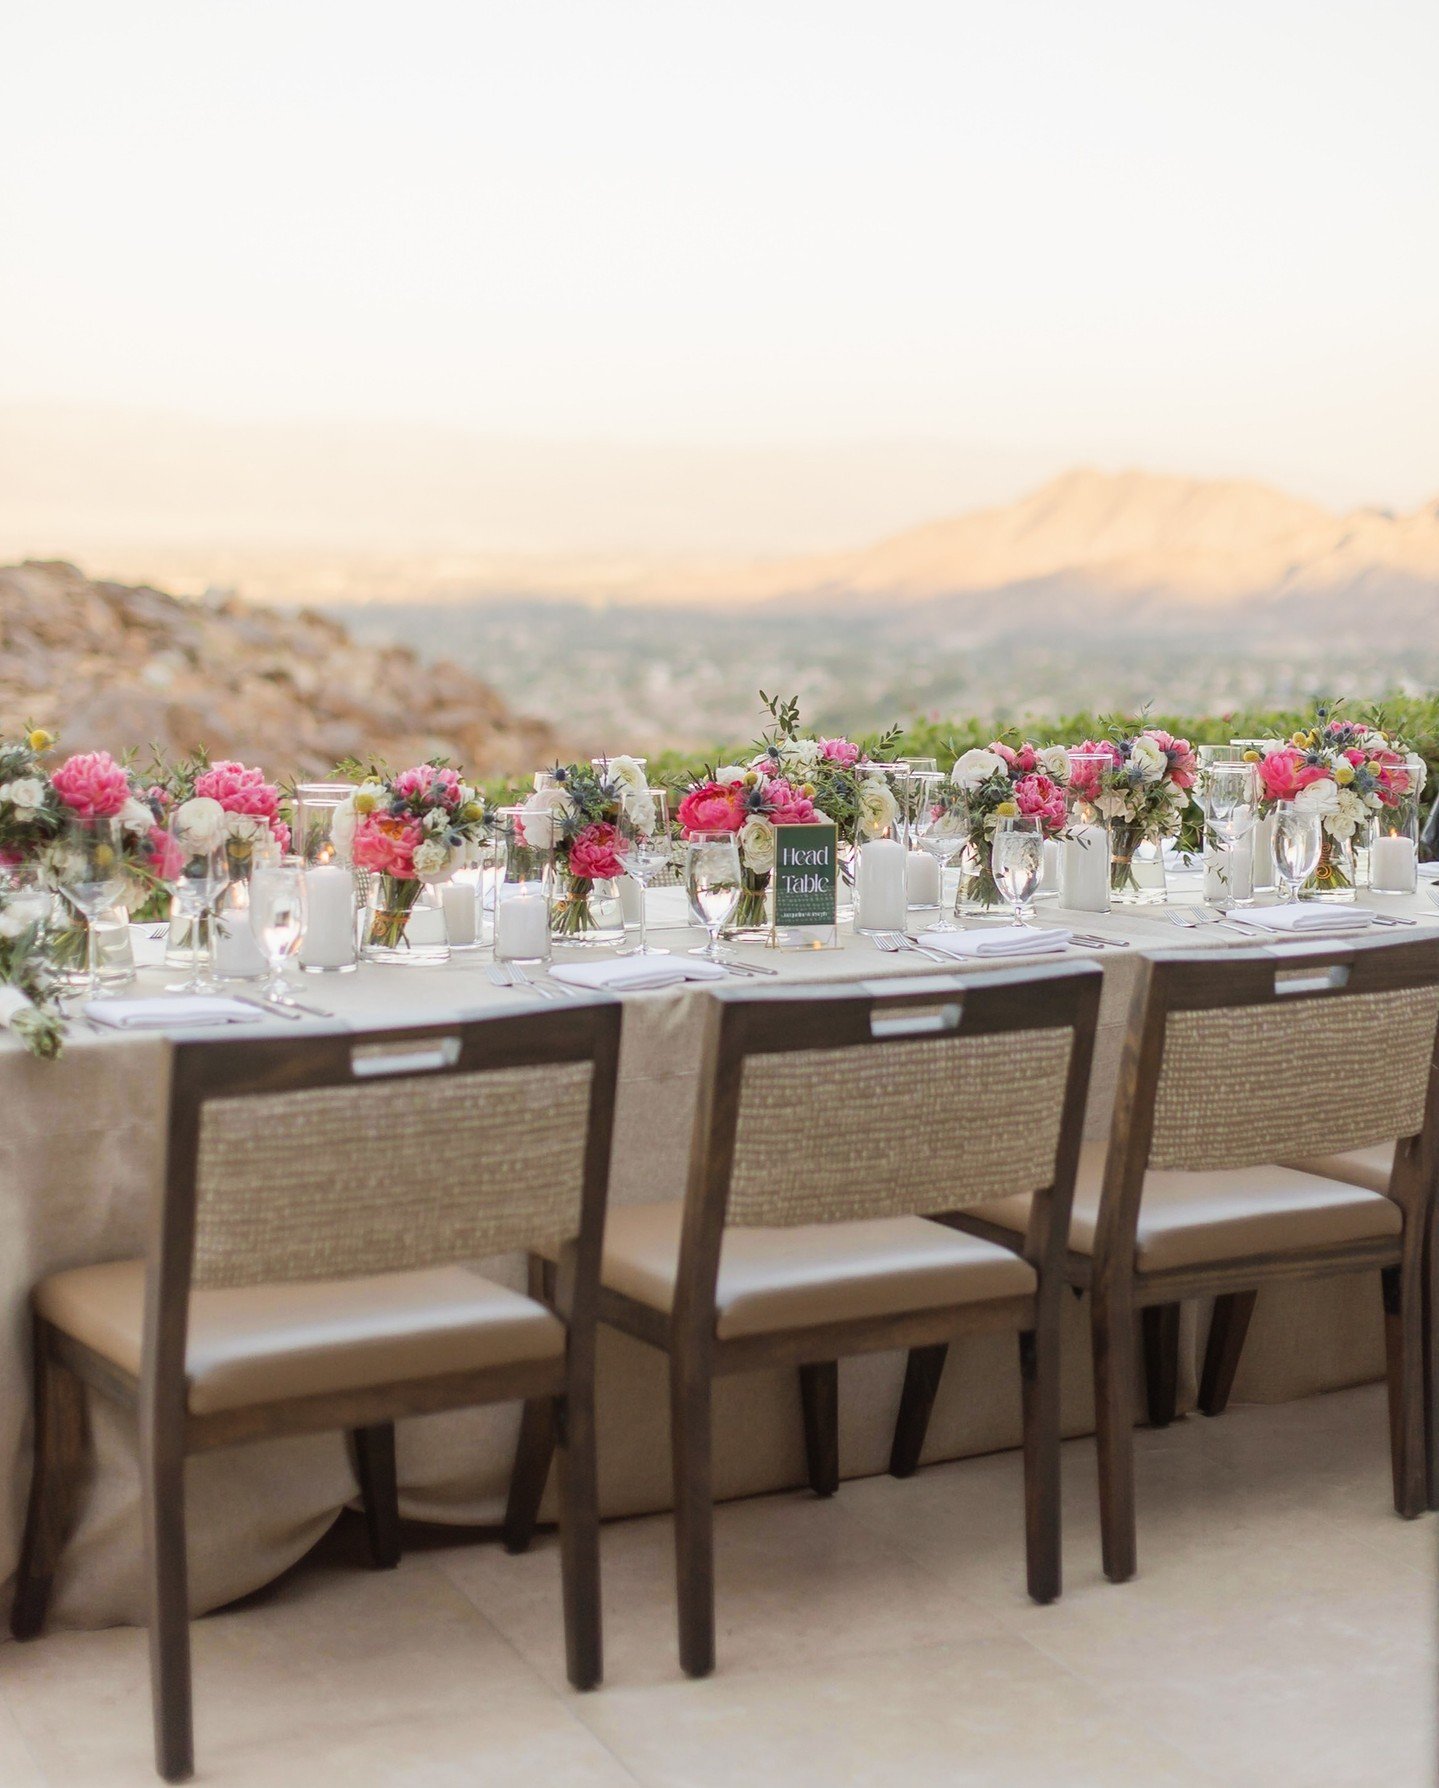 Dinner with a view ✨
...
#artisaninspiration #palmspringswedding #artisanevents #artisaneventfloraldecor #withartisanispiration #weddingreception #centerpieces #socalwedding #pinkflorals